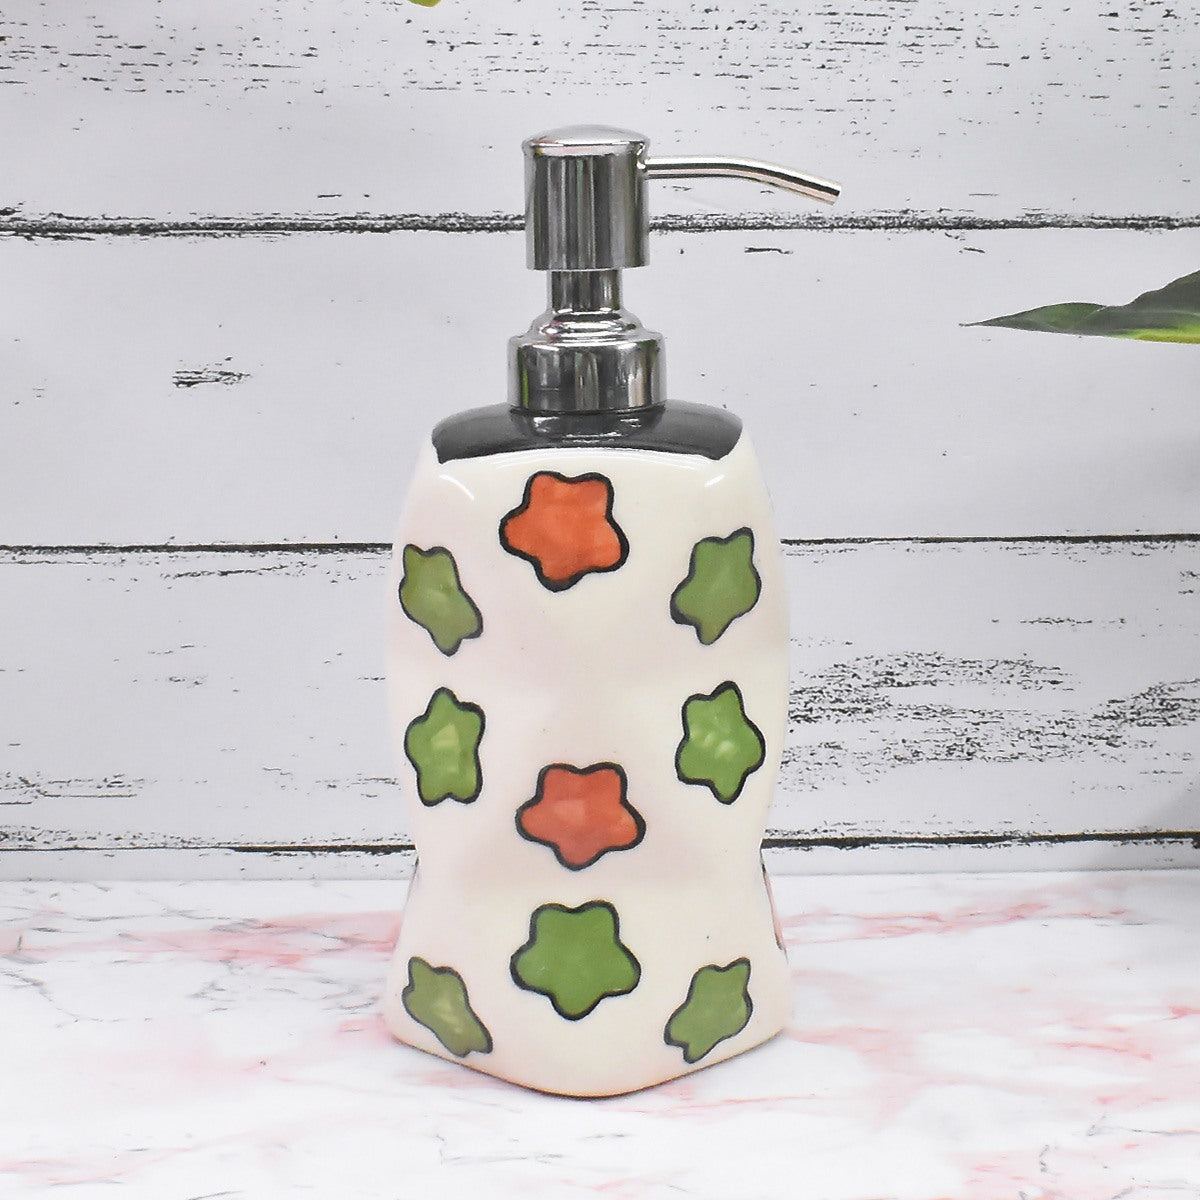 Ceramic Soap Dispenser handwash Pump for Bathroom, Set of 1, Multicolor (9687)